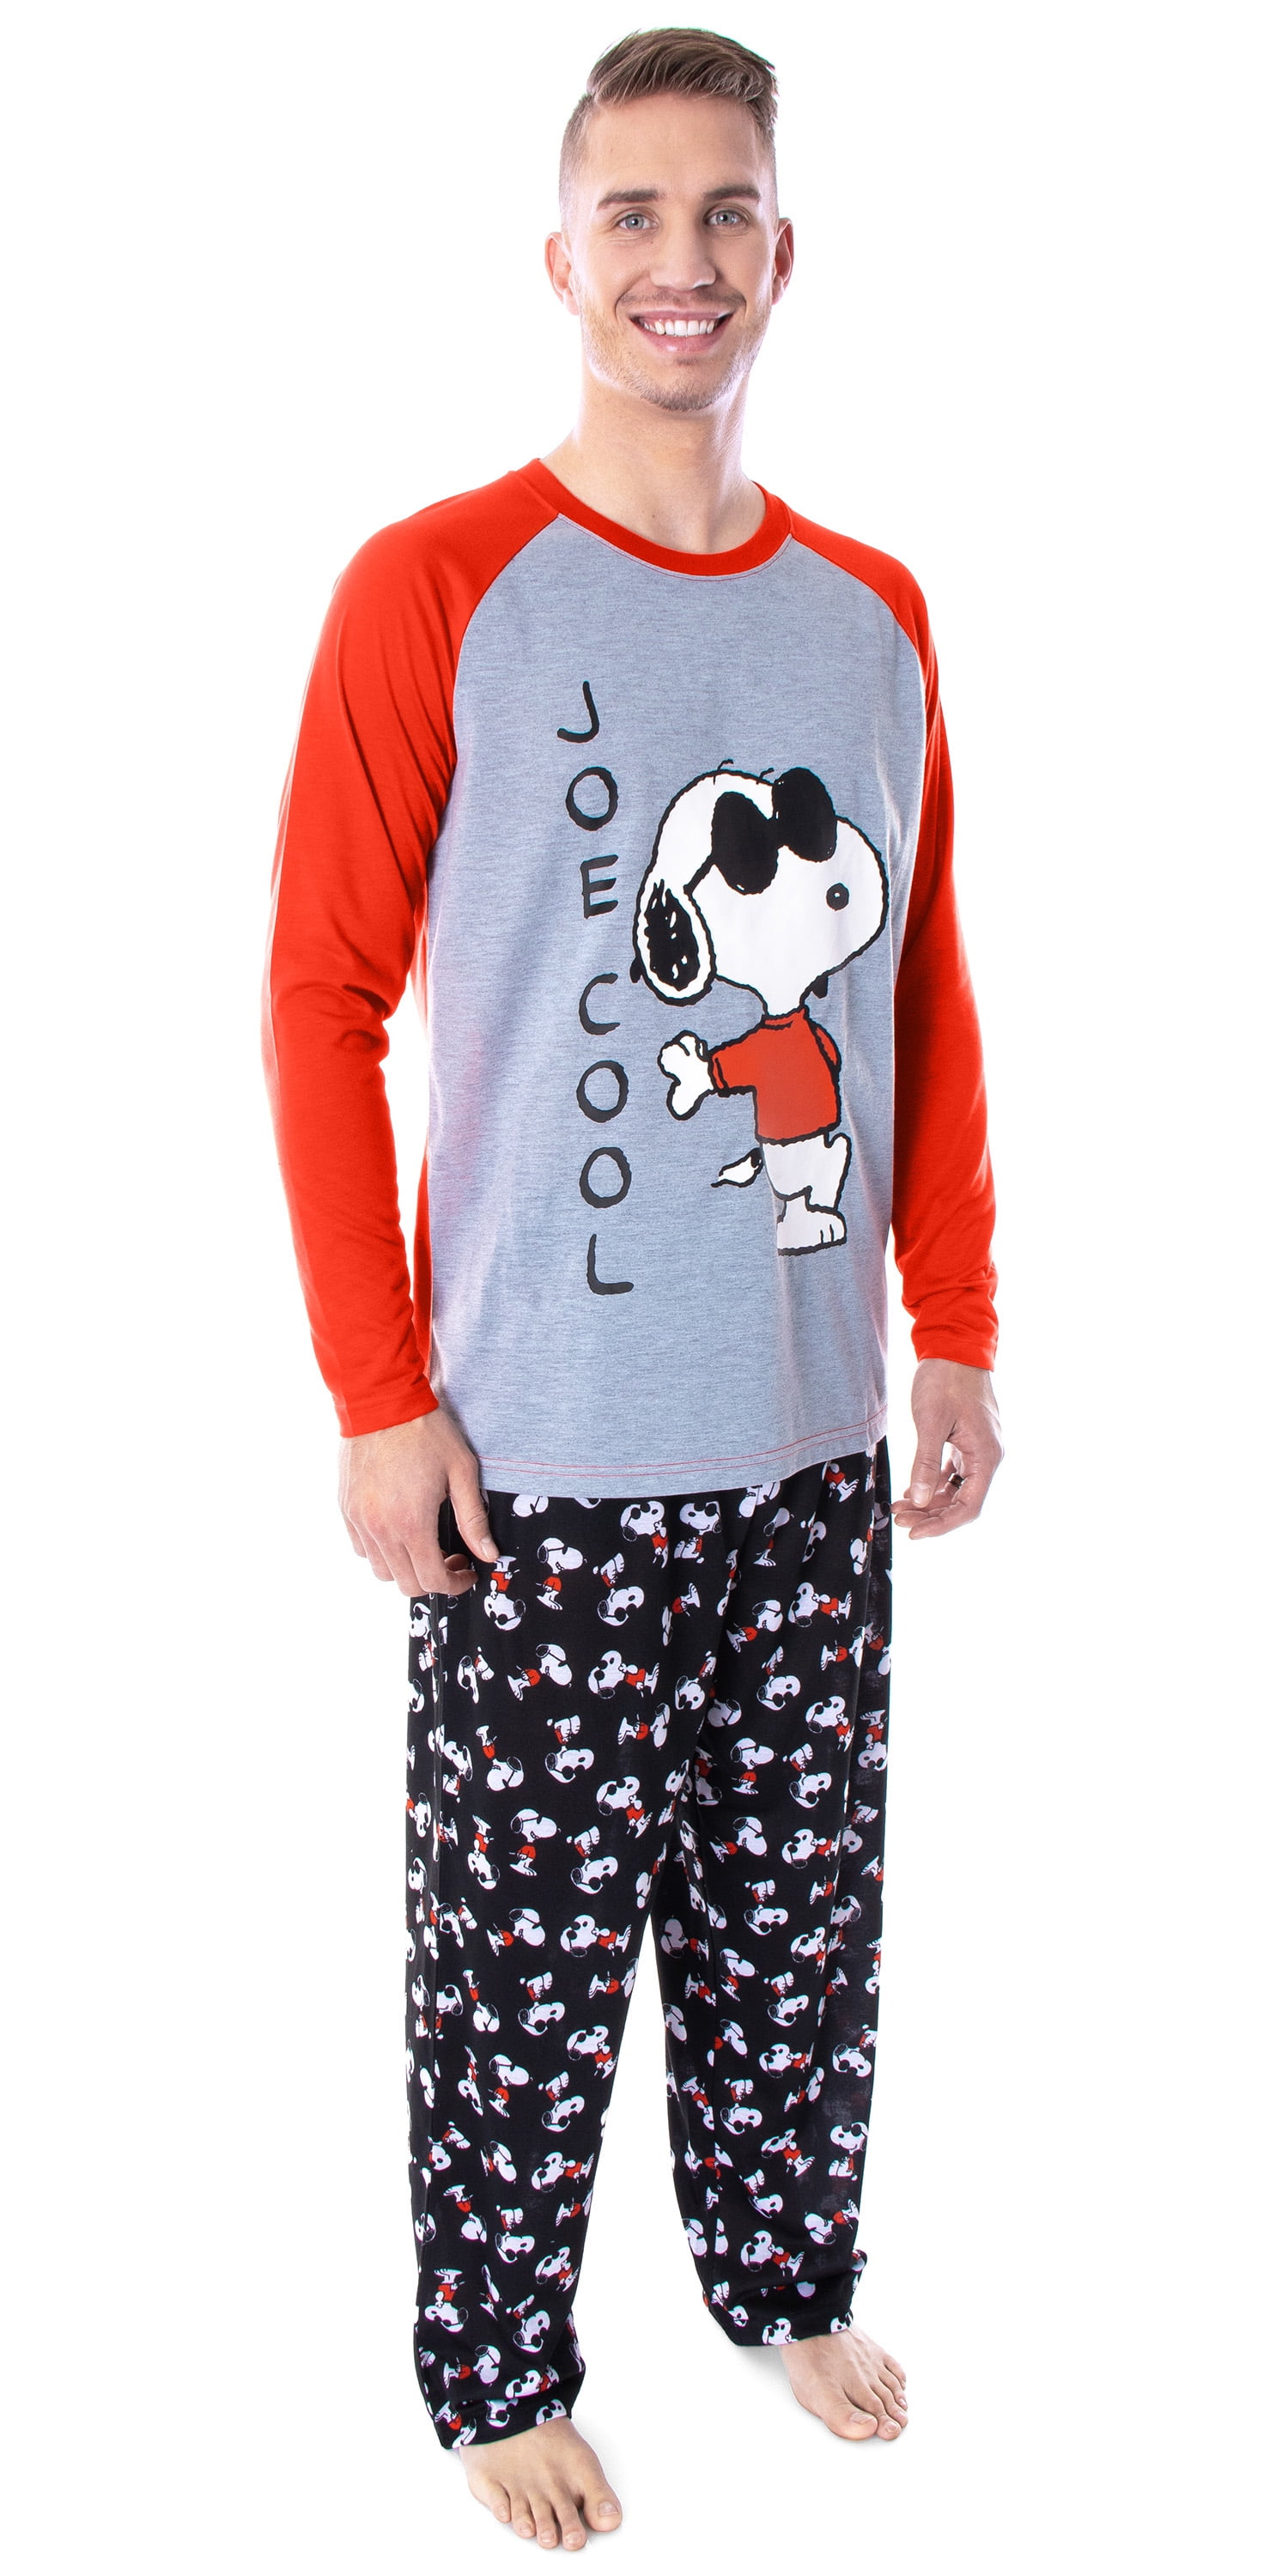 Toy Story 4 Boys L/S 2pc Pajama Pant Set Size 4 6 8 10 $40 